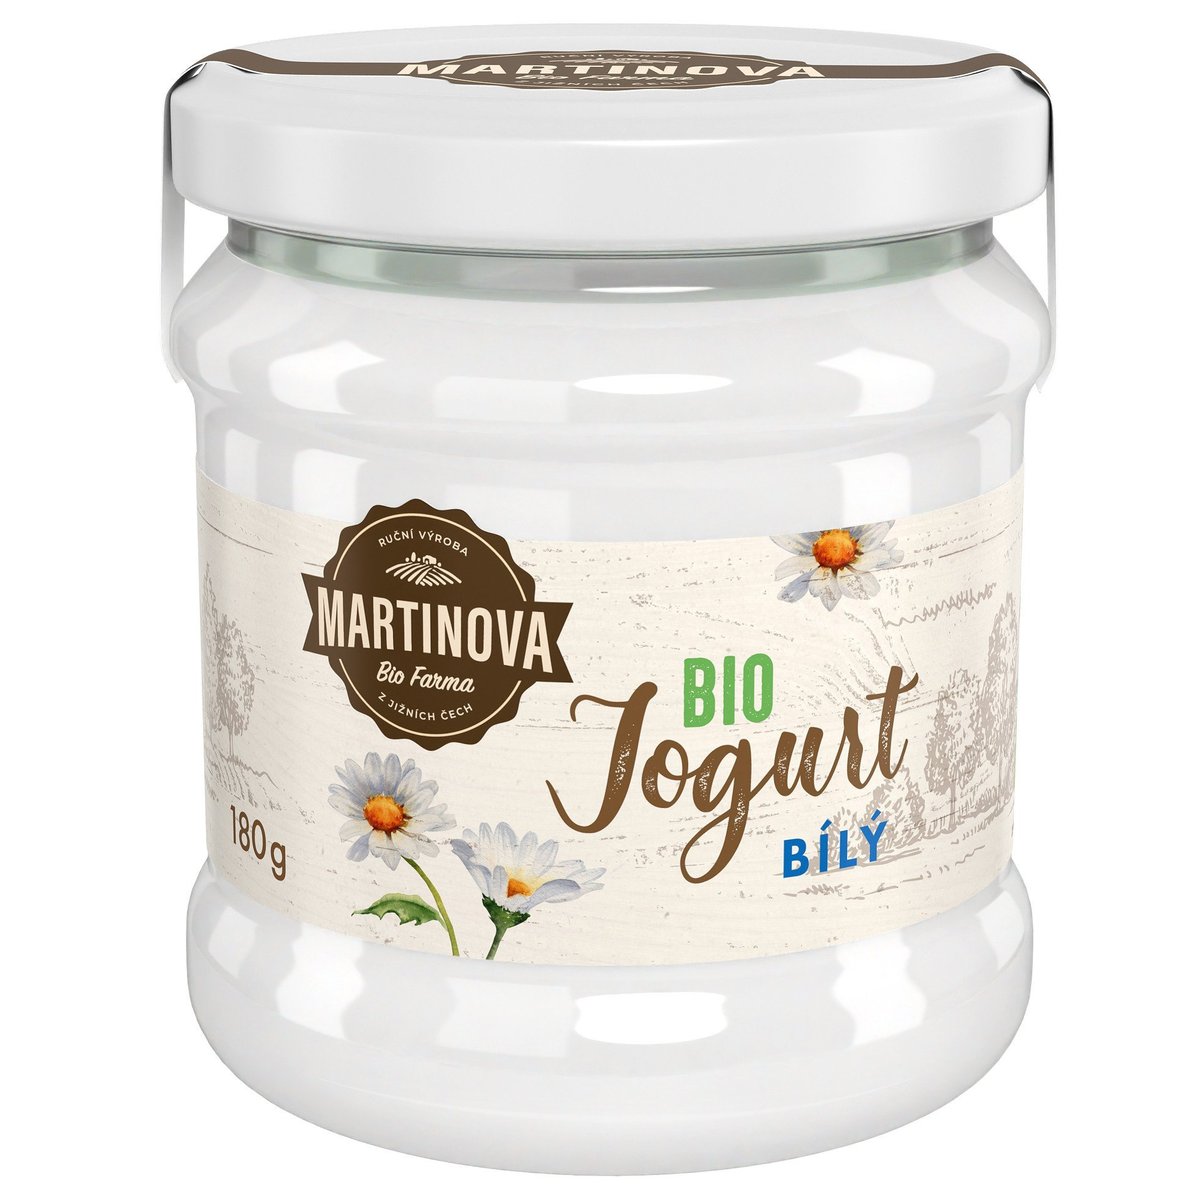 Martinova Bio Farma BIO Jogurt bílý